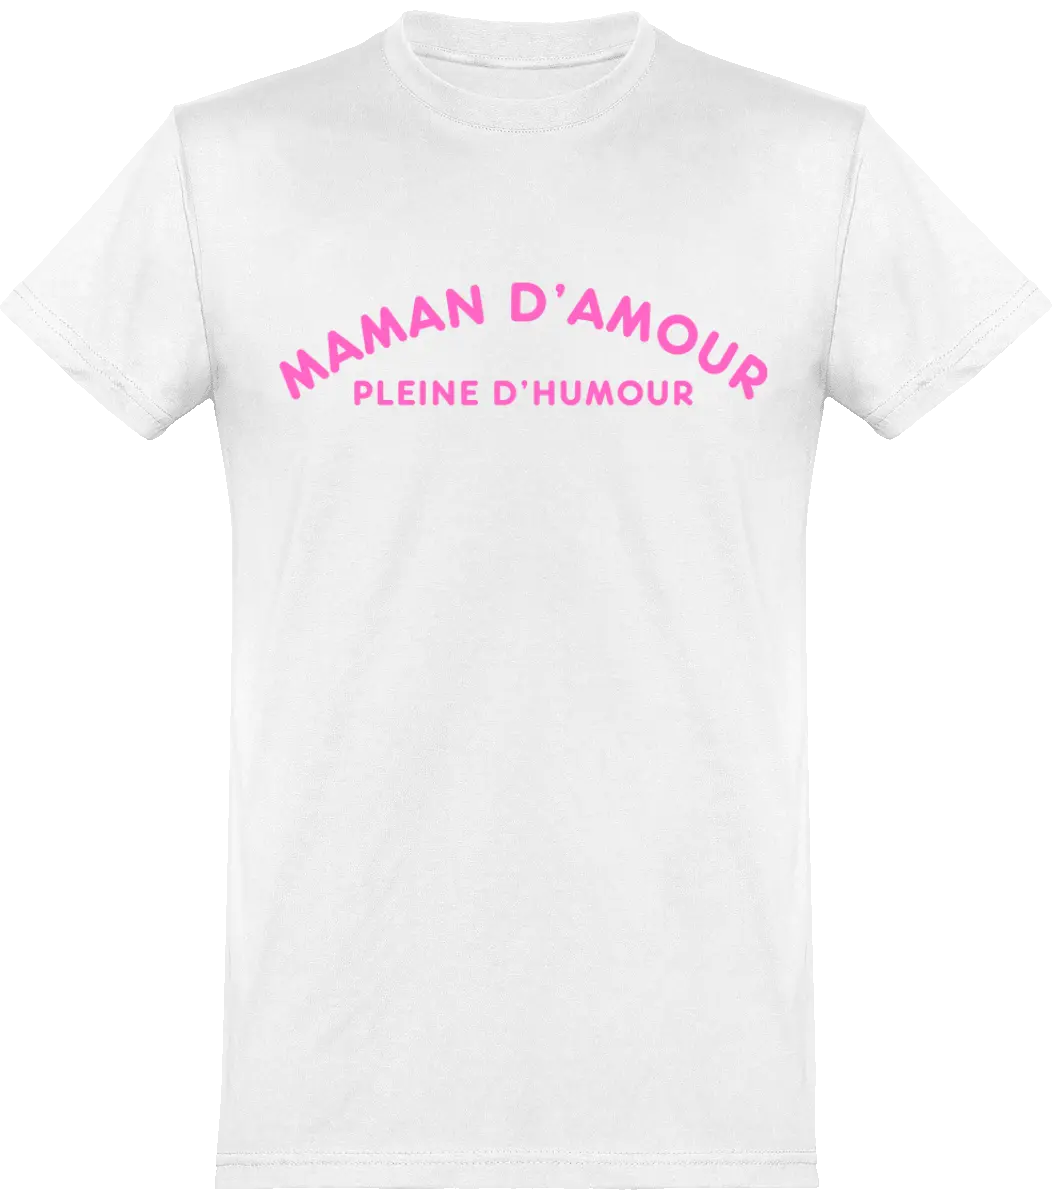 T-shirt maman "Maman d'amour pleine d'humour" | Mixte - French Humour